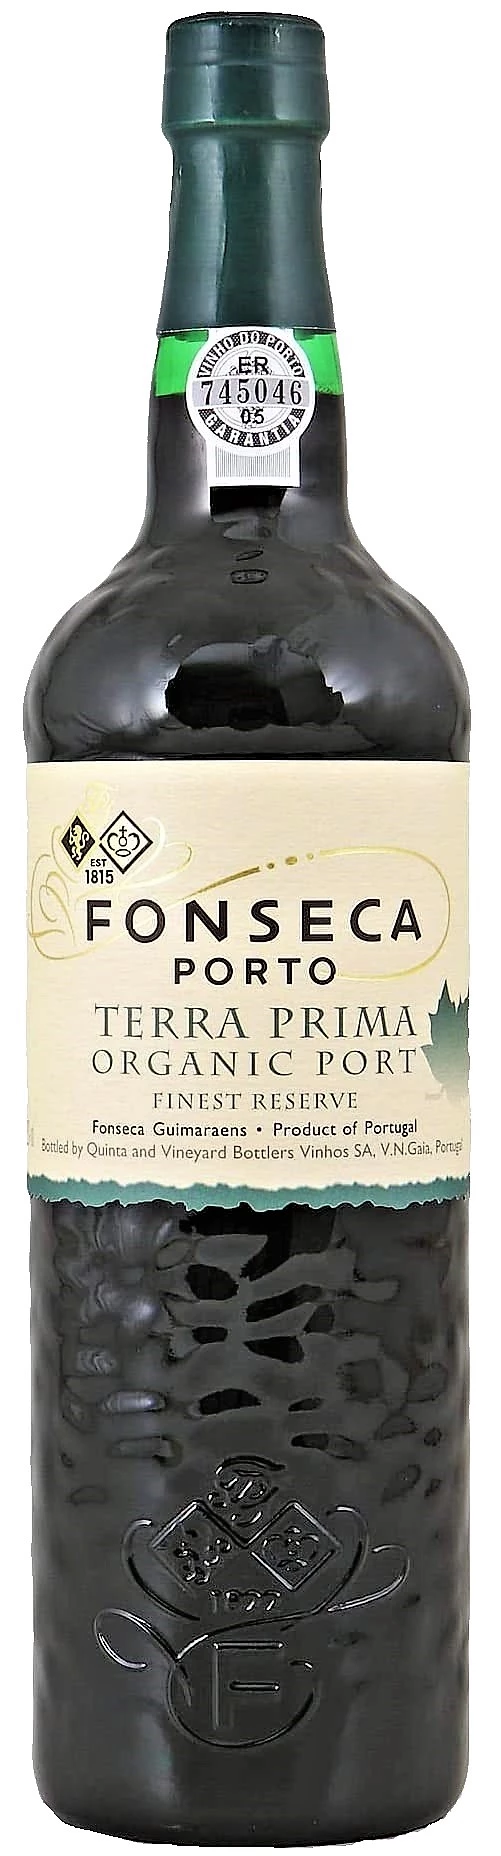 Fonseca_Terra-Prima-Finest-Reserve-Port-Organic